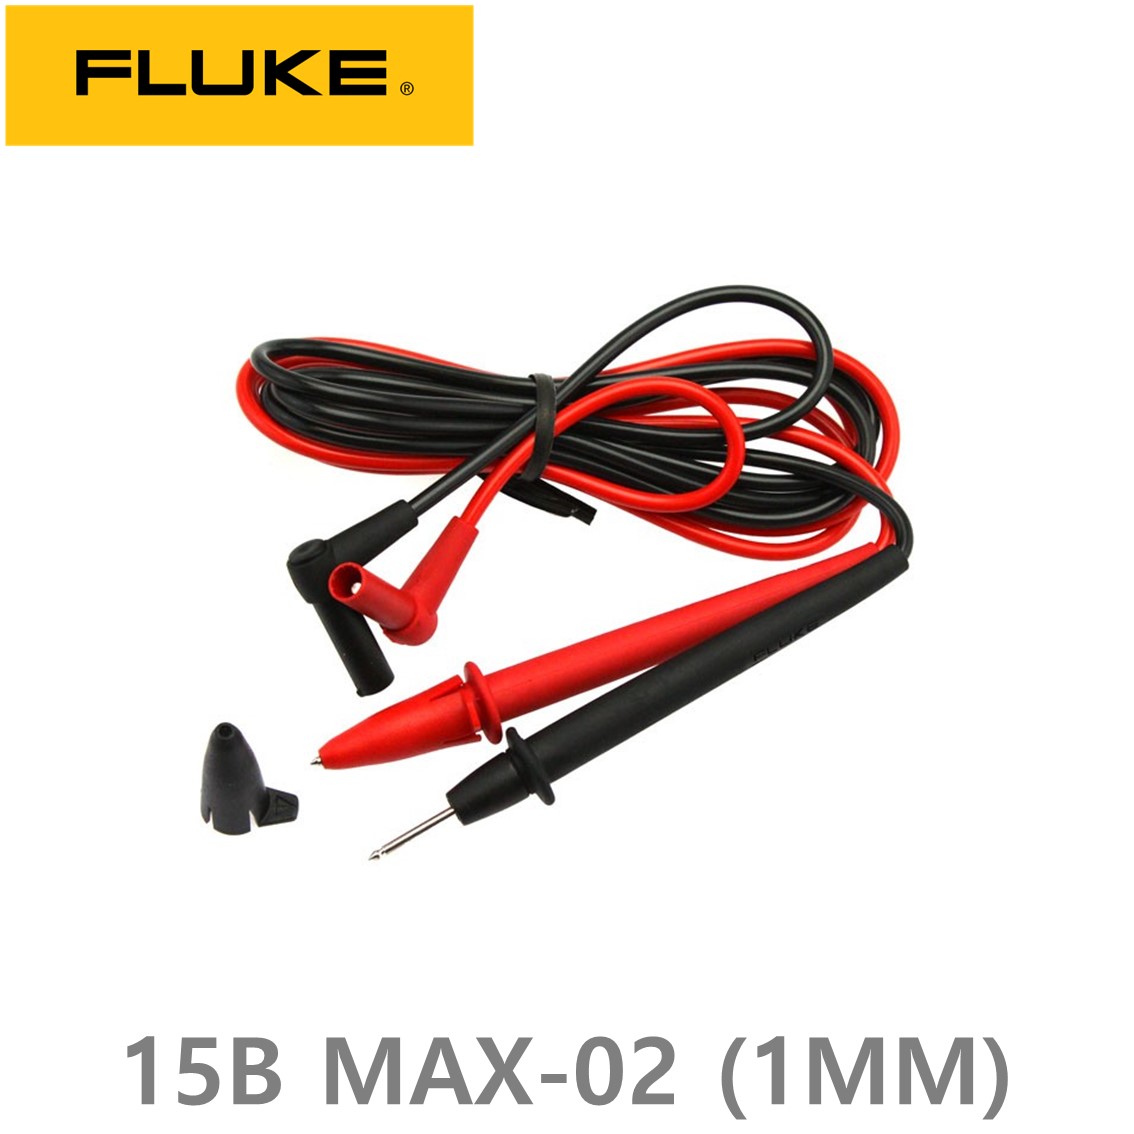 [ FLUKE 15B MAX-02 ] 정품 플루크 15B MAX 멀티미터, 테스터기, 1MM 테스트리드